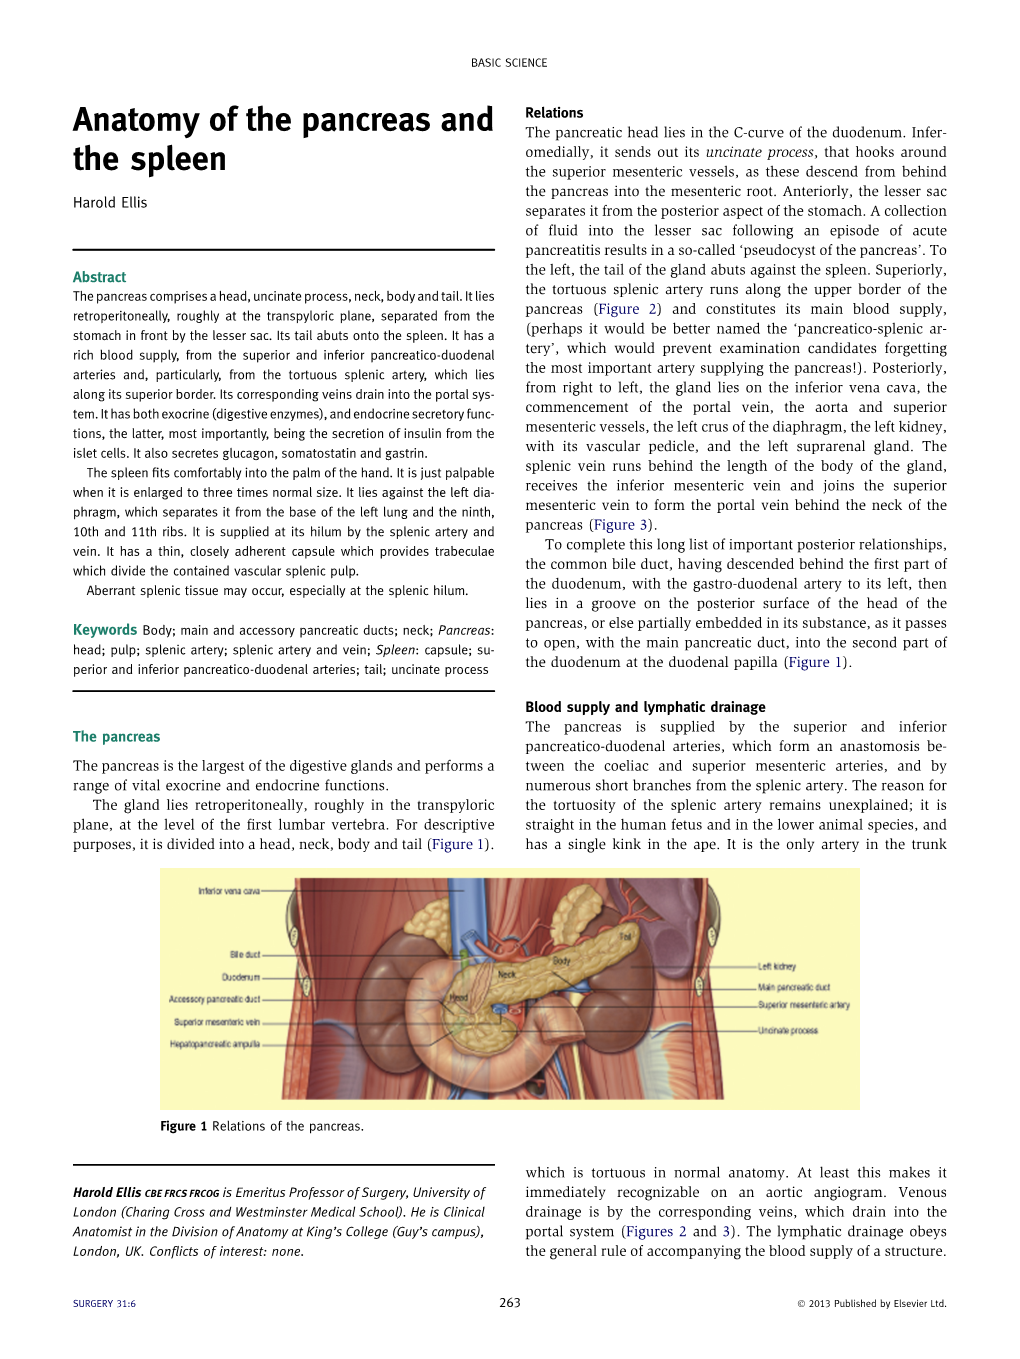 Anatomy of the Pancreas and the Spleen